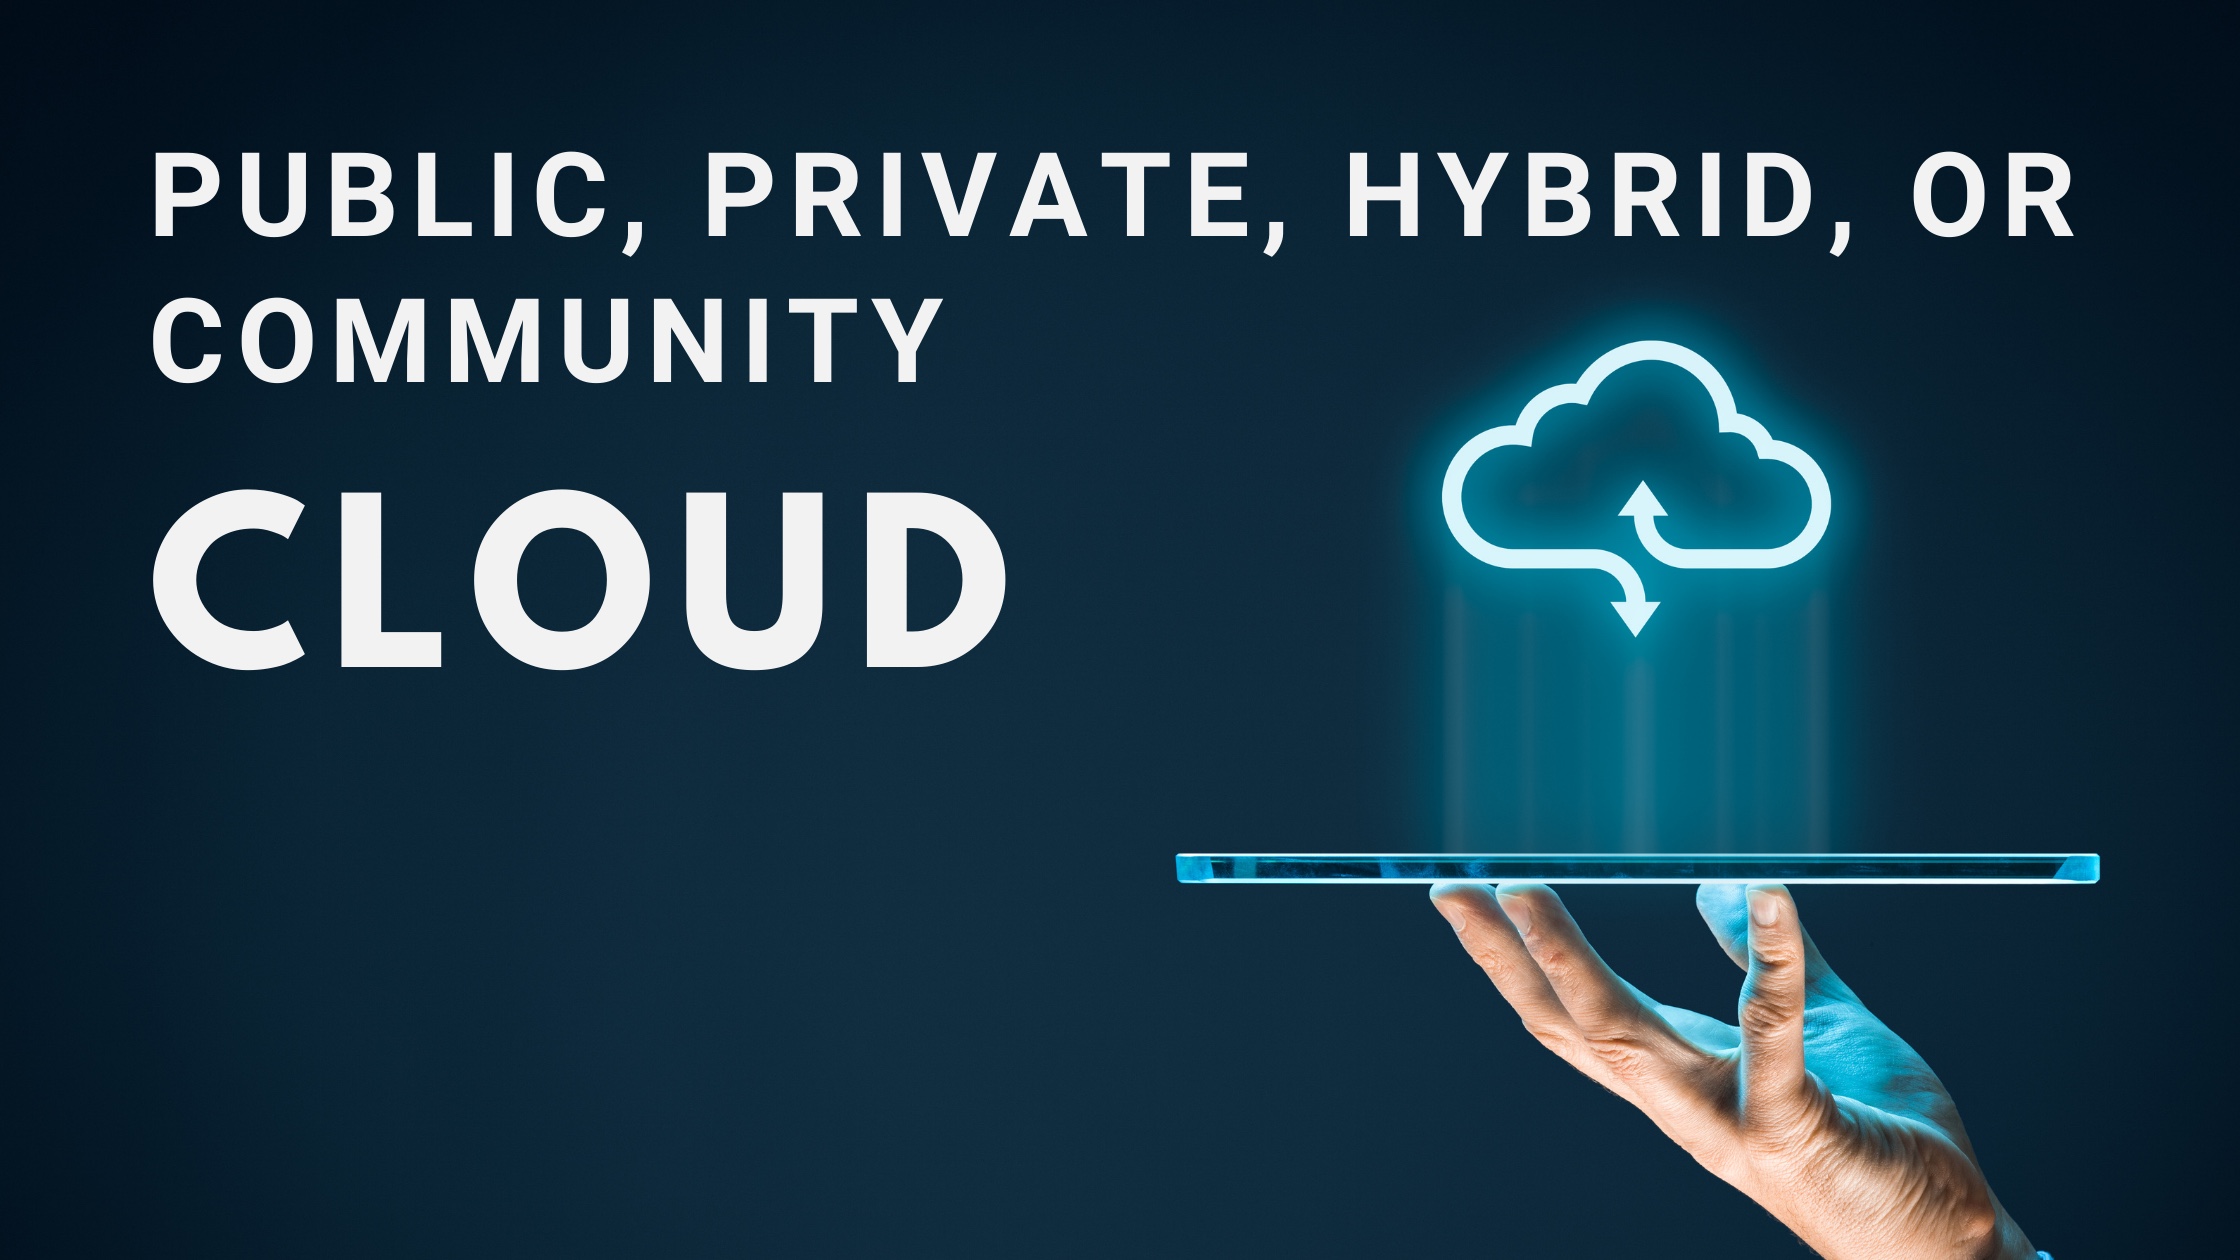 Public, private, community, or hybrid cloud